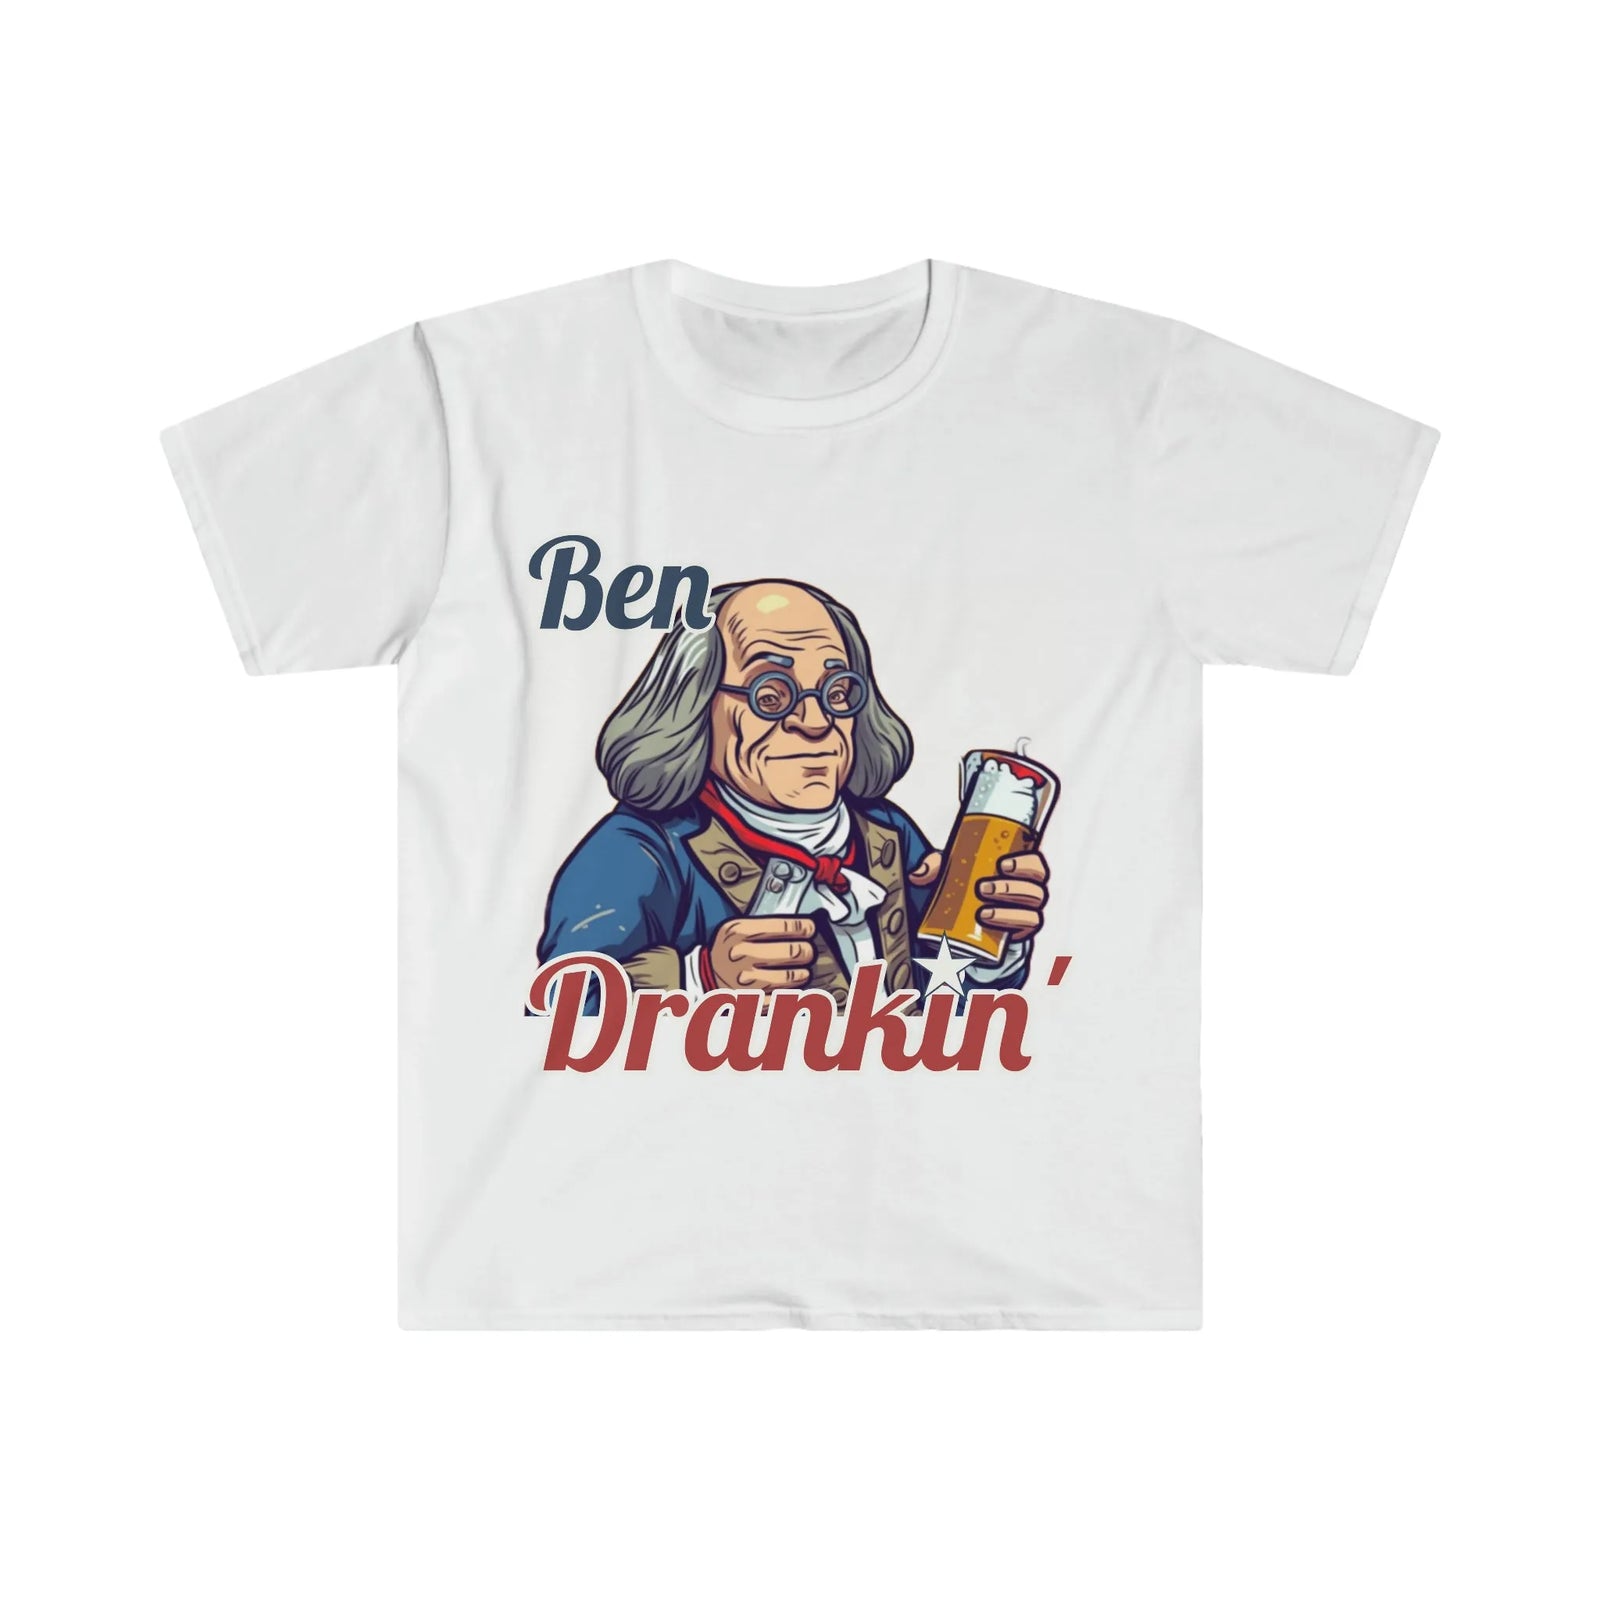 Ben Franklin's 